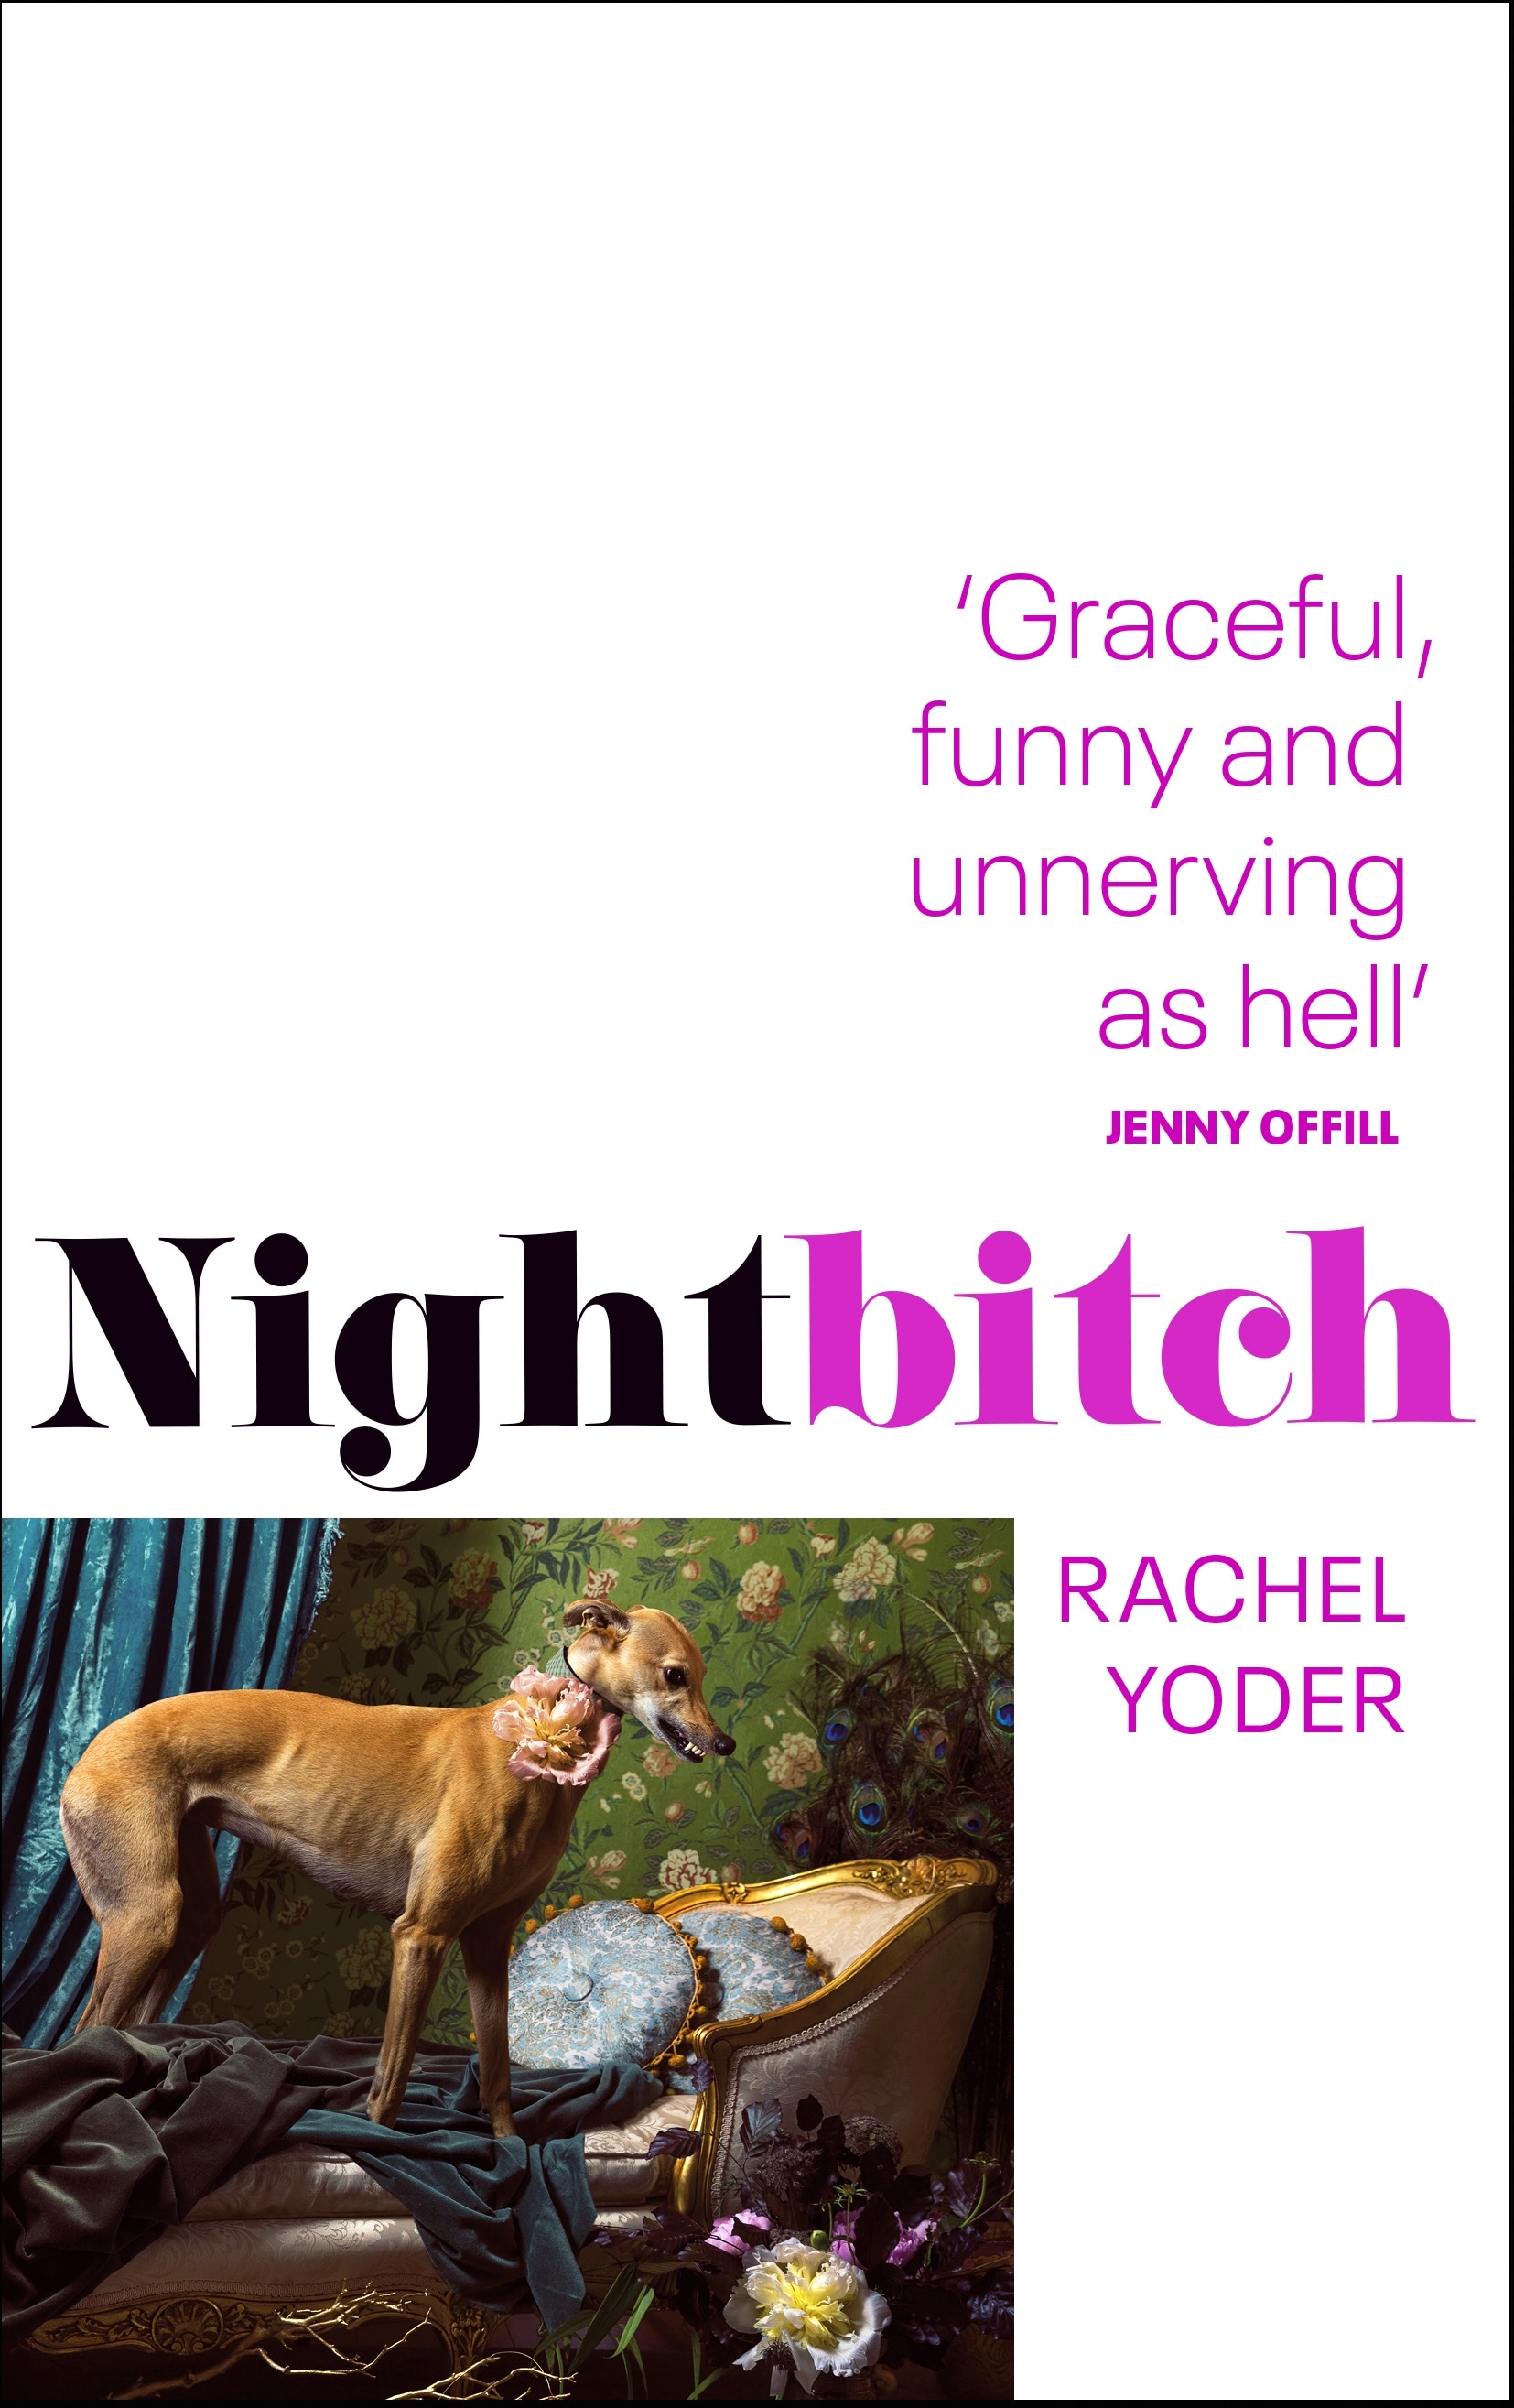 Book “Nightbitch” by Rachel Yoder — July 22, 2021